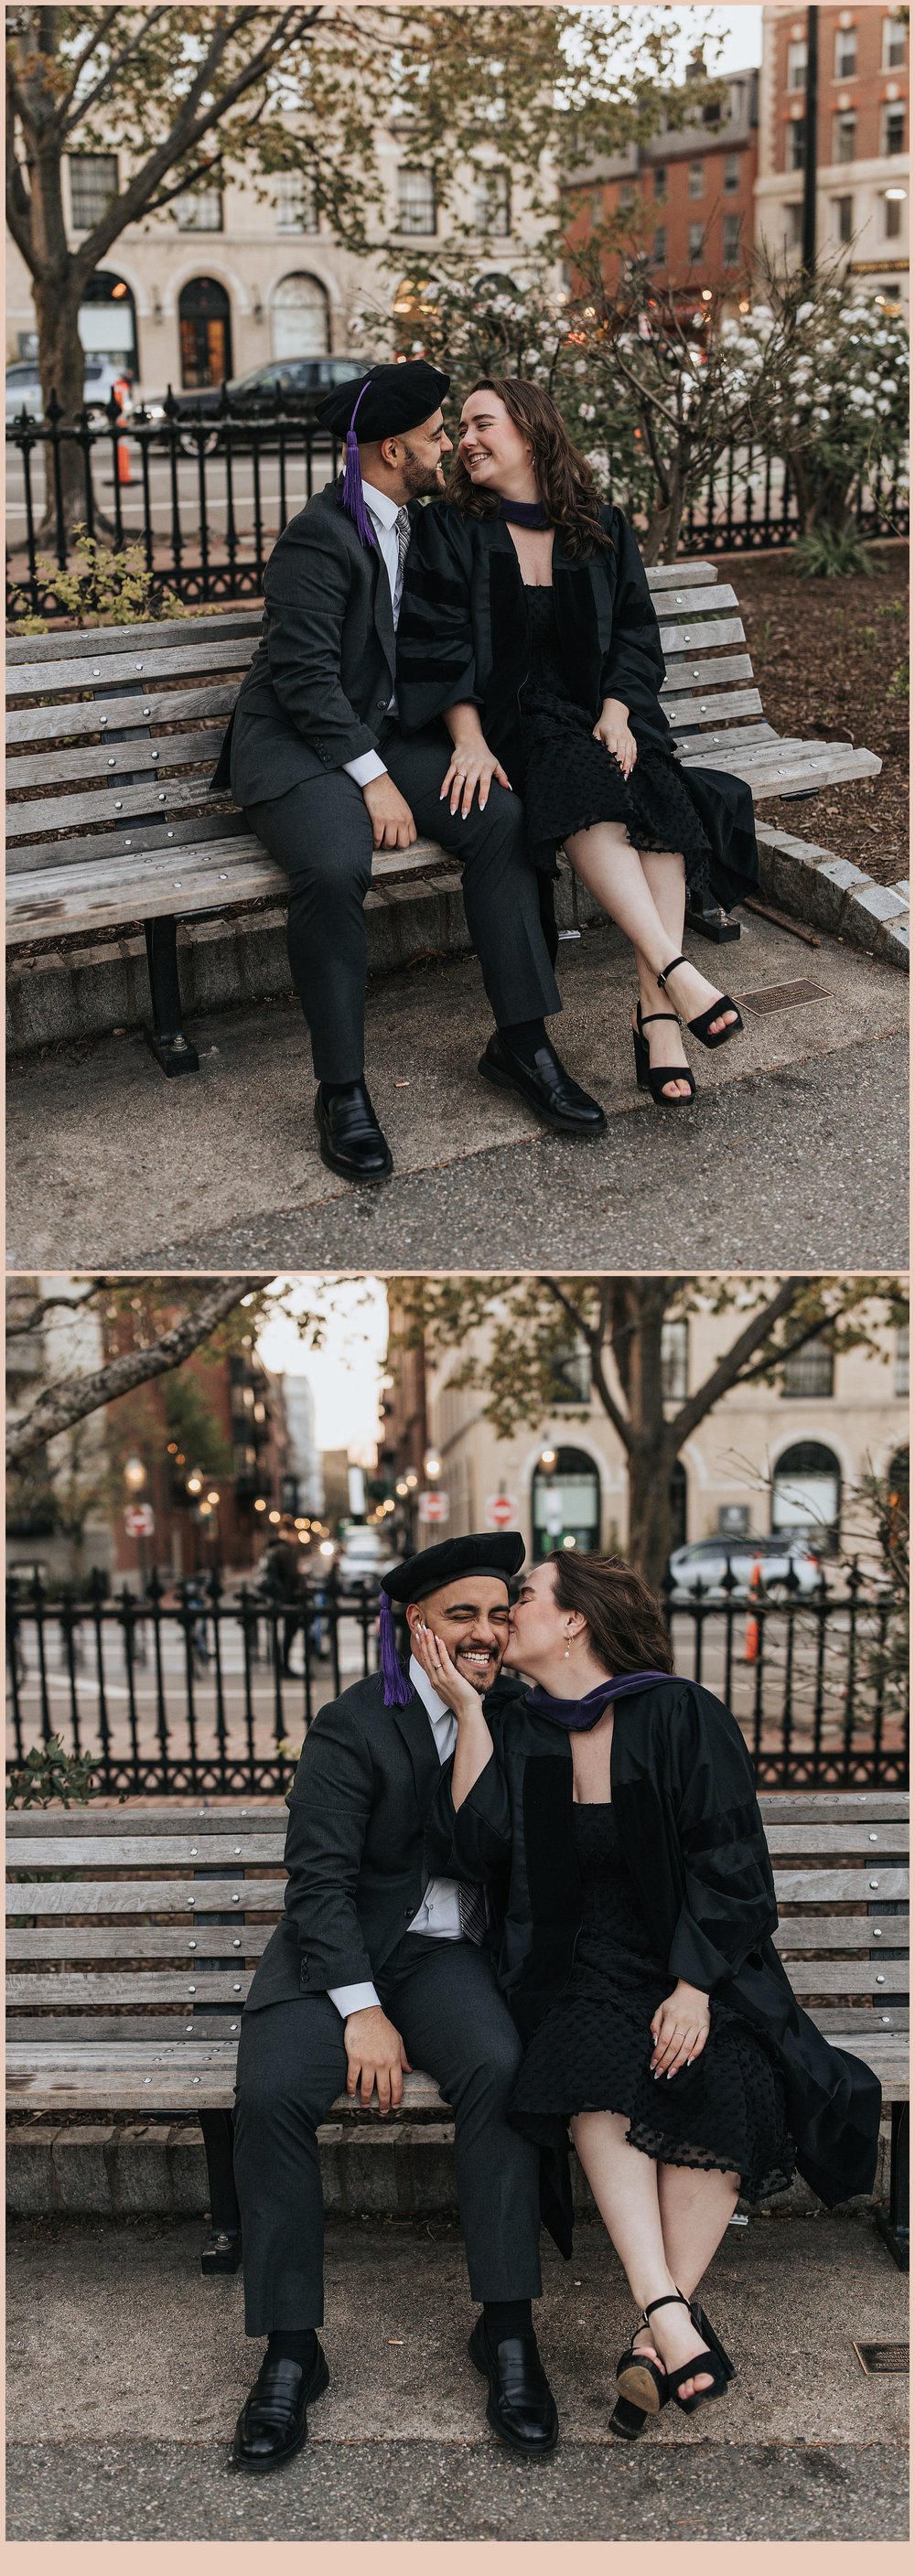 Couples-Boston-College-Graduation-Photos-11.jpg